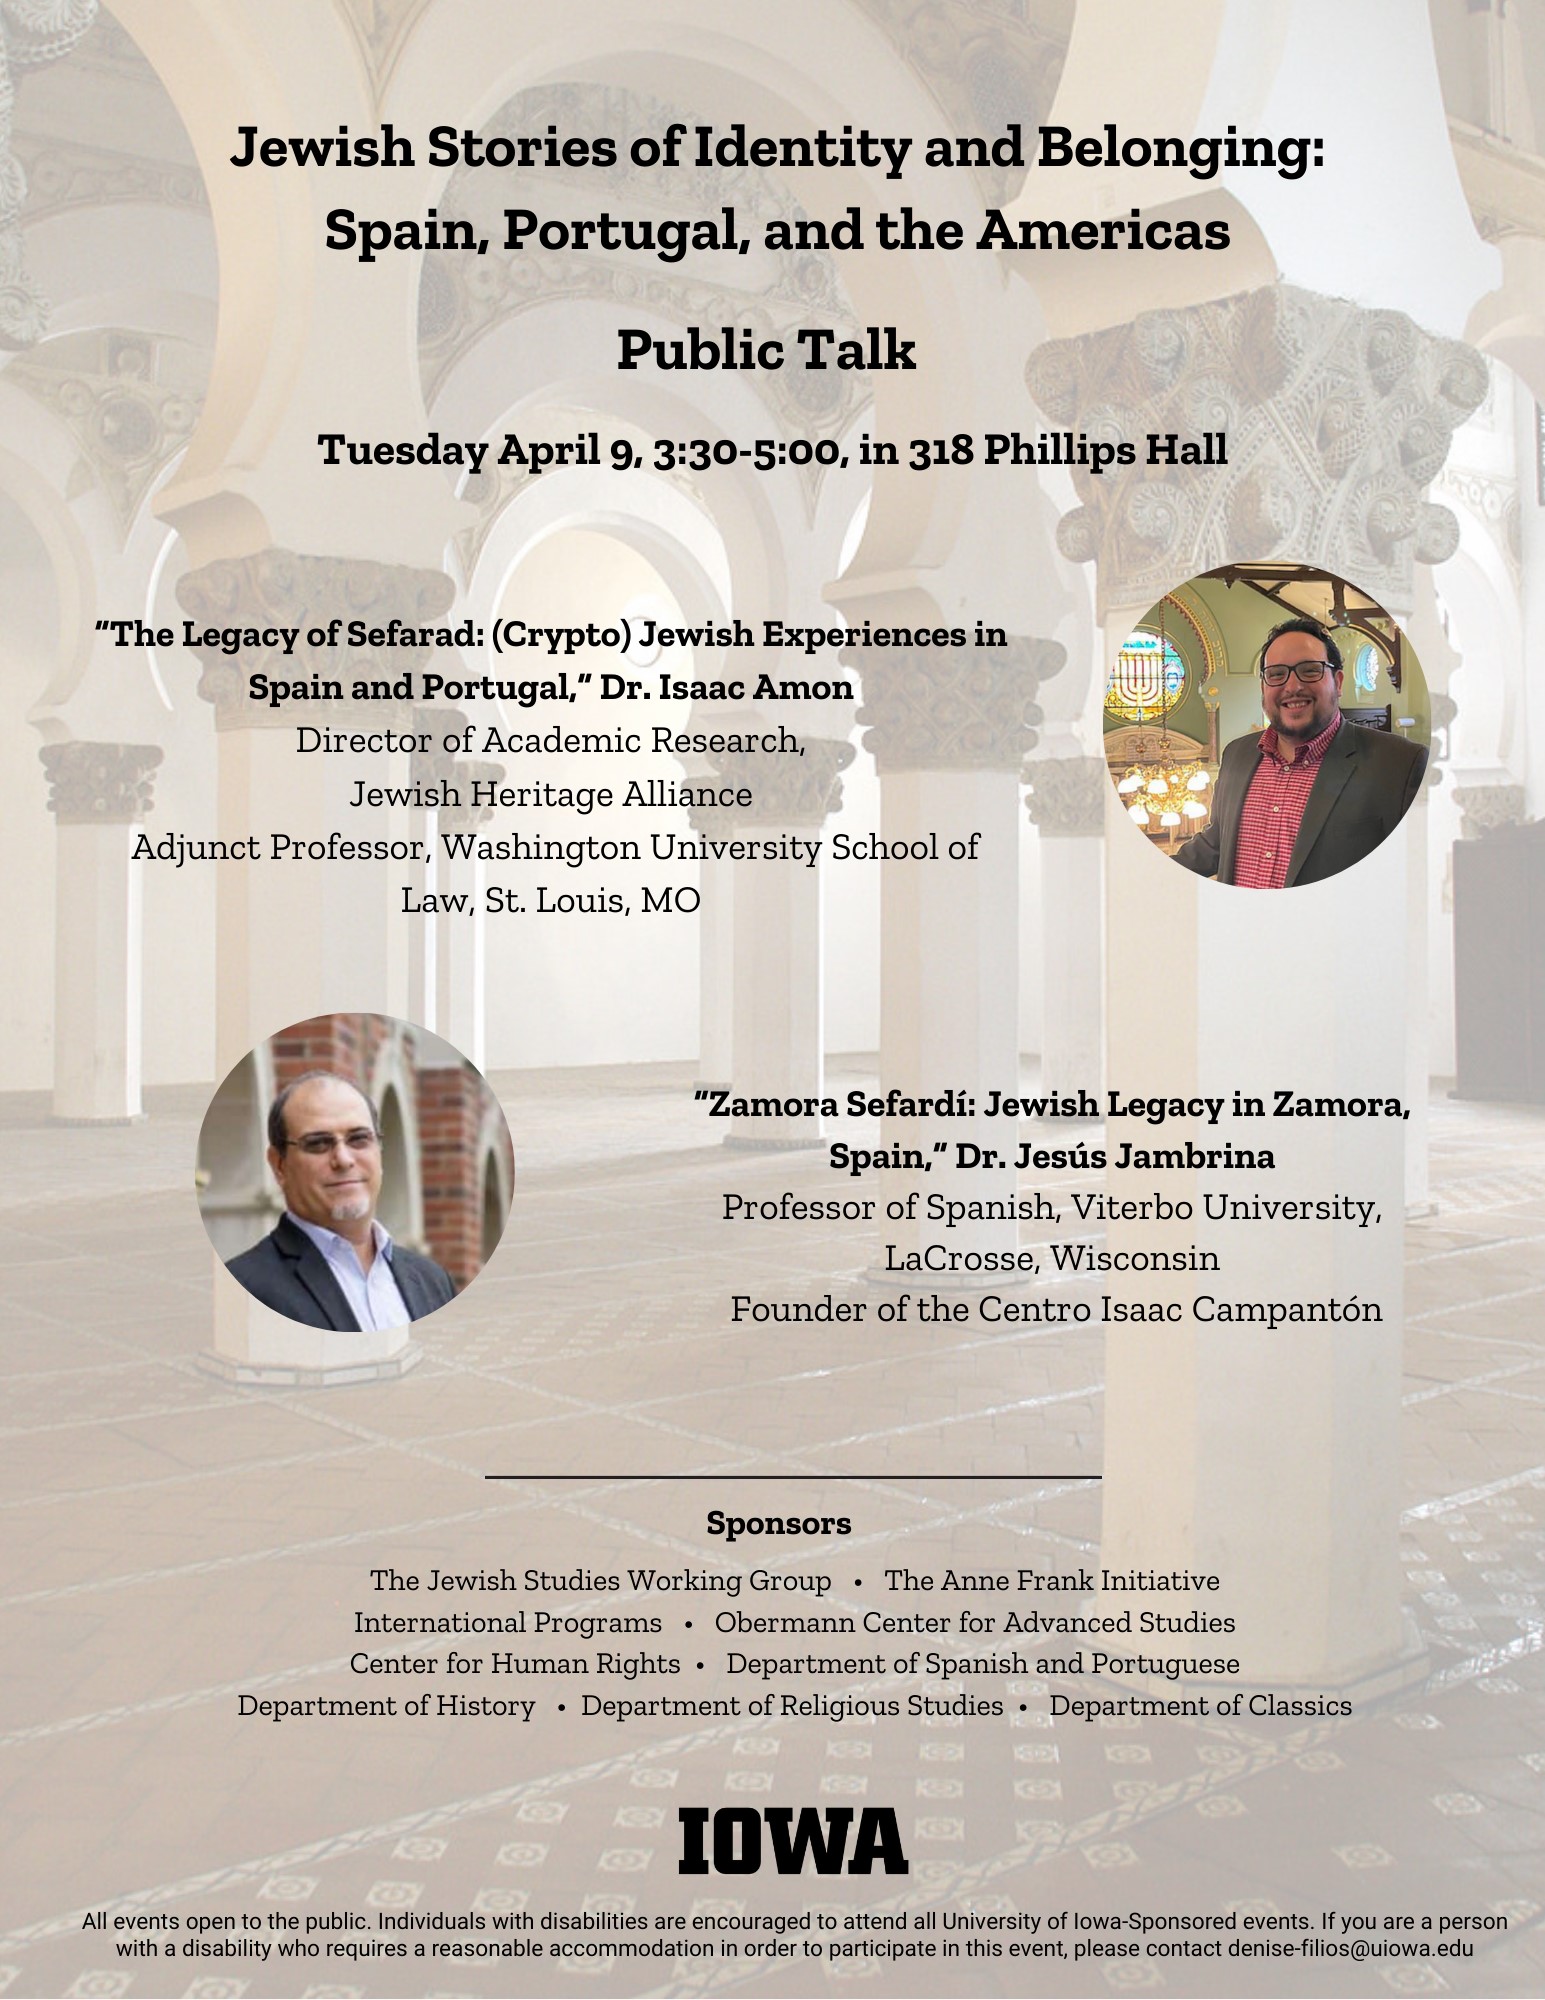 tuesday april 9 talk at 3:30 about Jewish identity